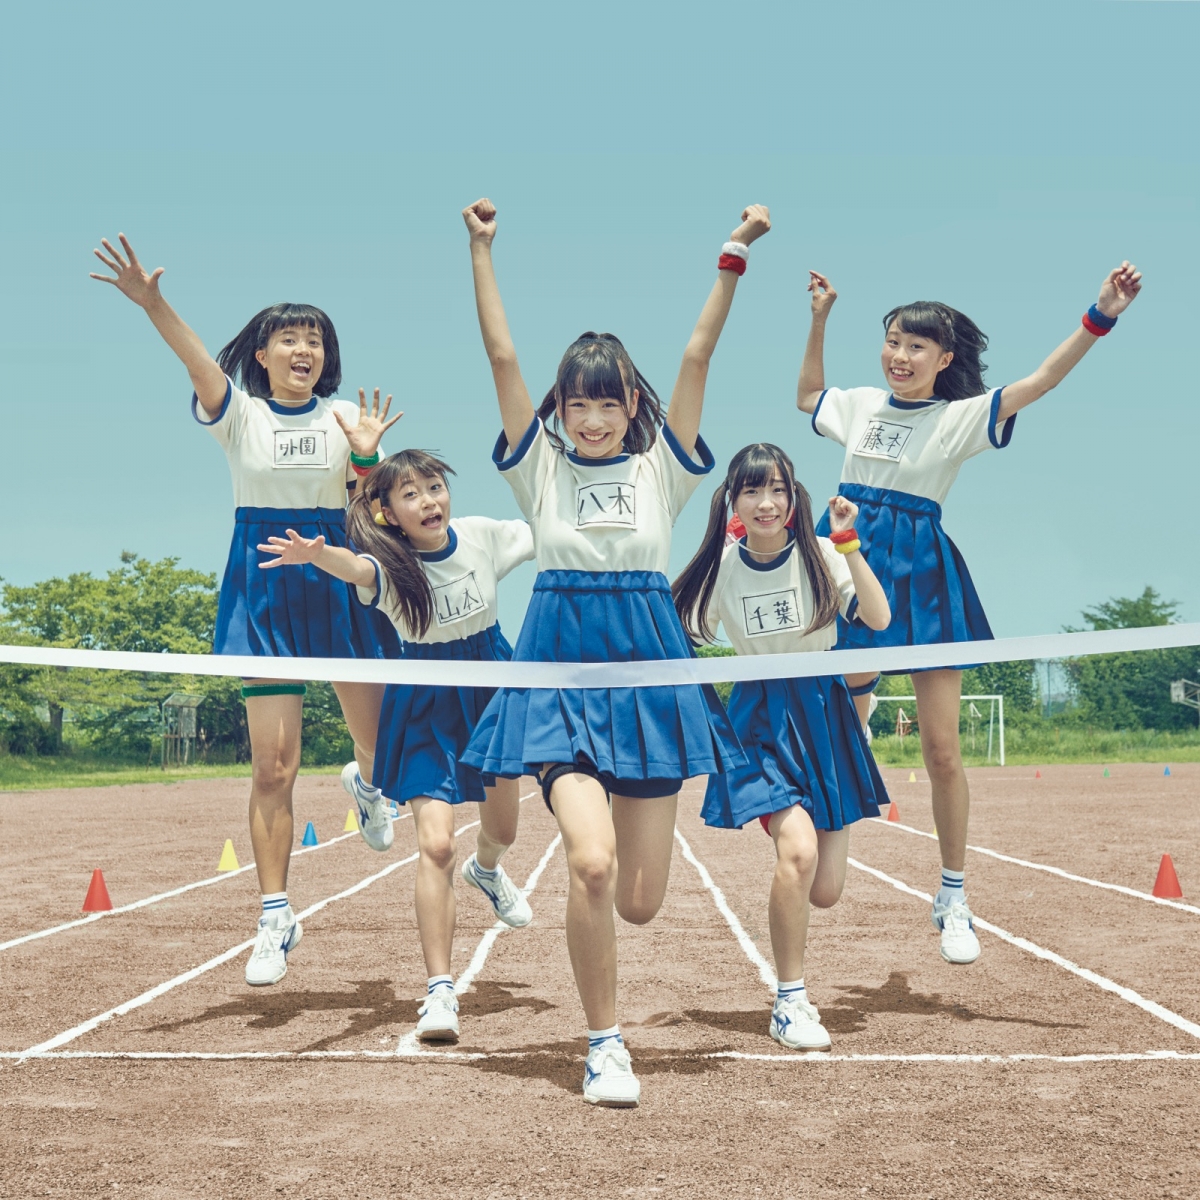 Petit PASSPO☆ Display Their Fresh Fighting Spirit in the MV for “Samurai Girl”!